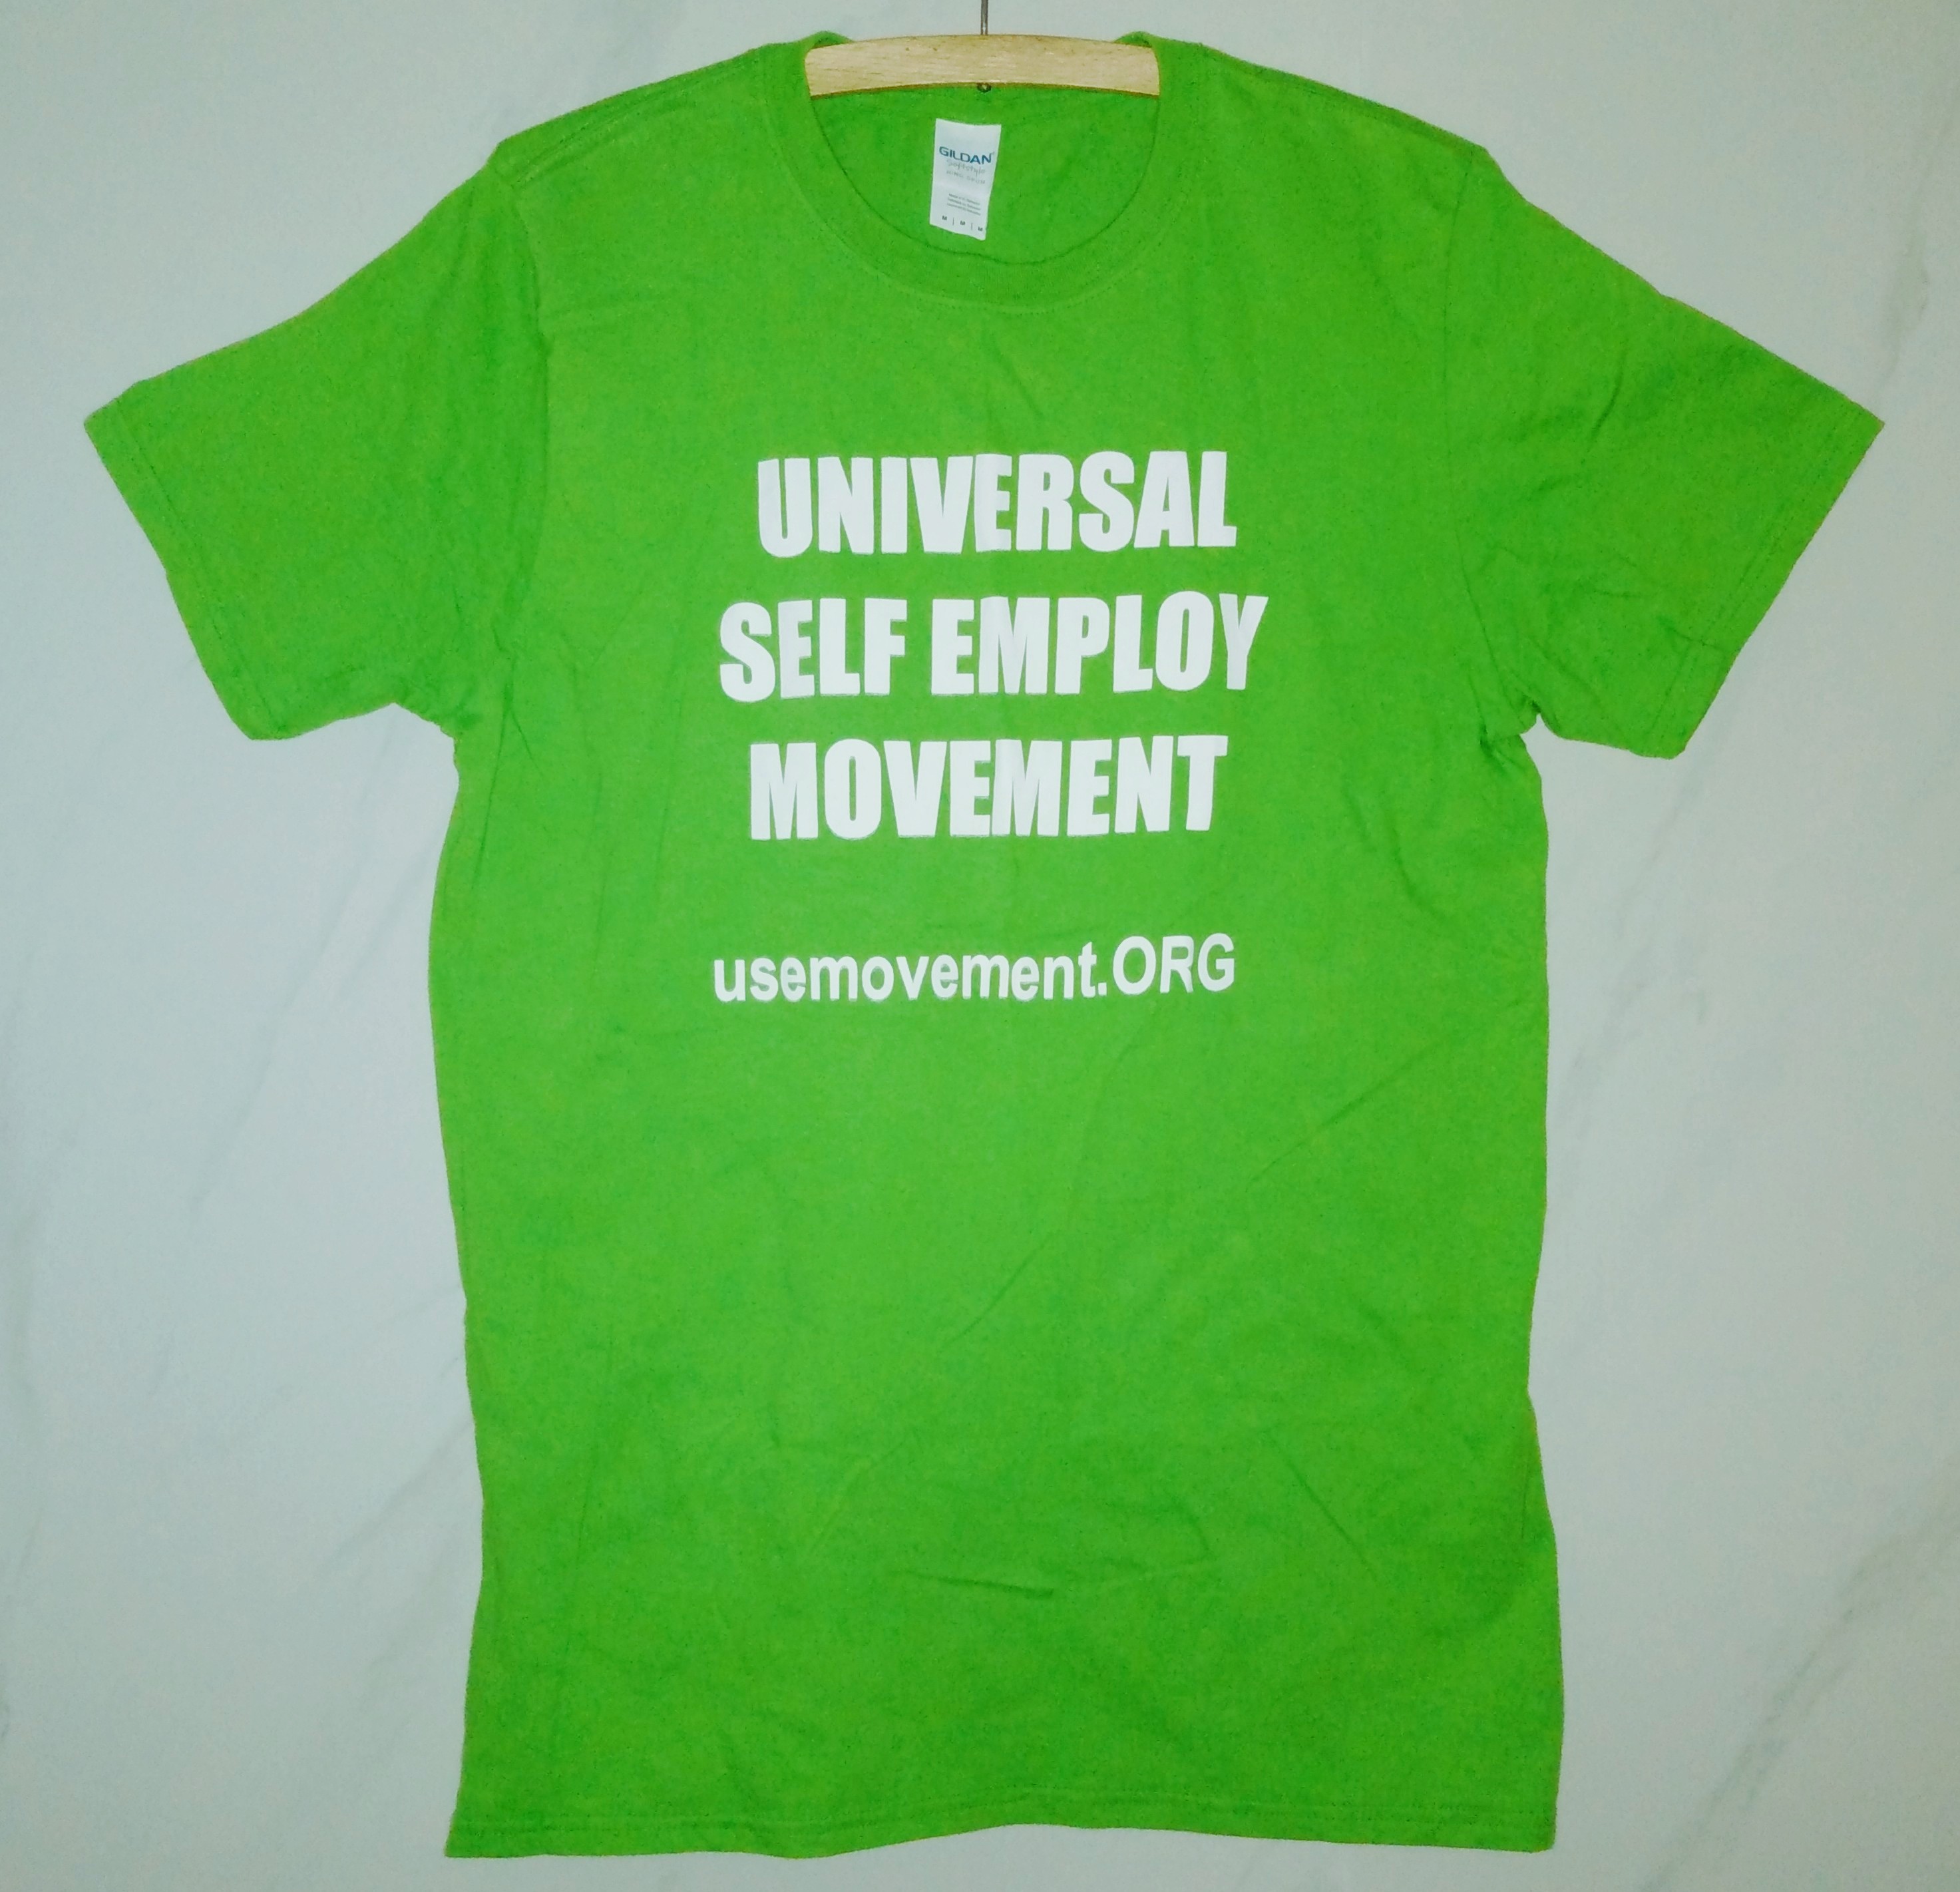 Shirt front: UNIVERSAL SELF EMPLOY MOVEMENT